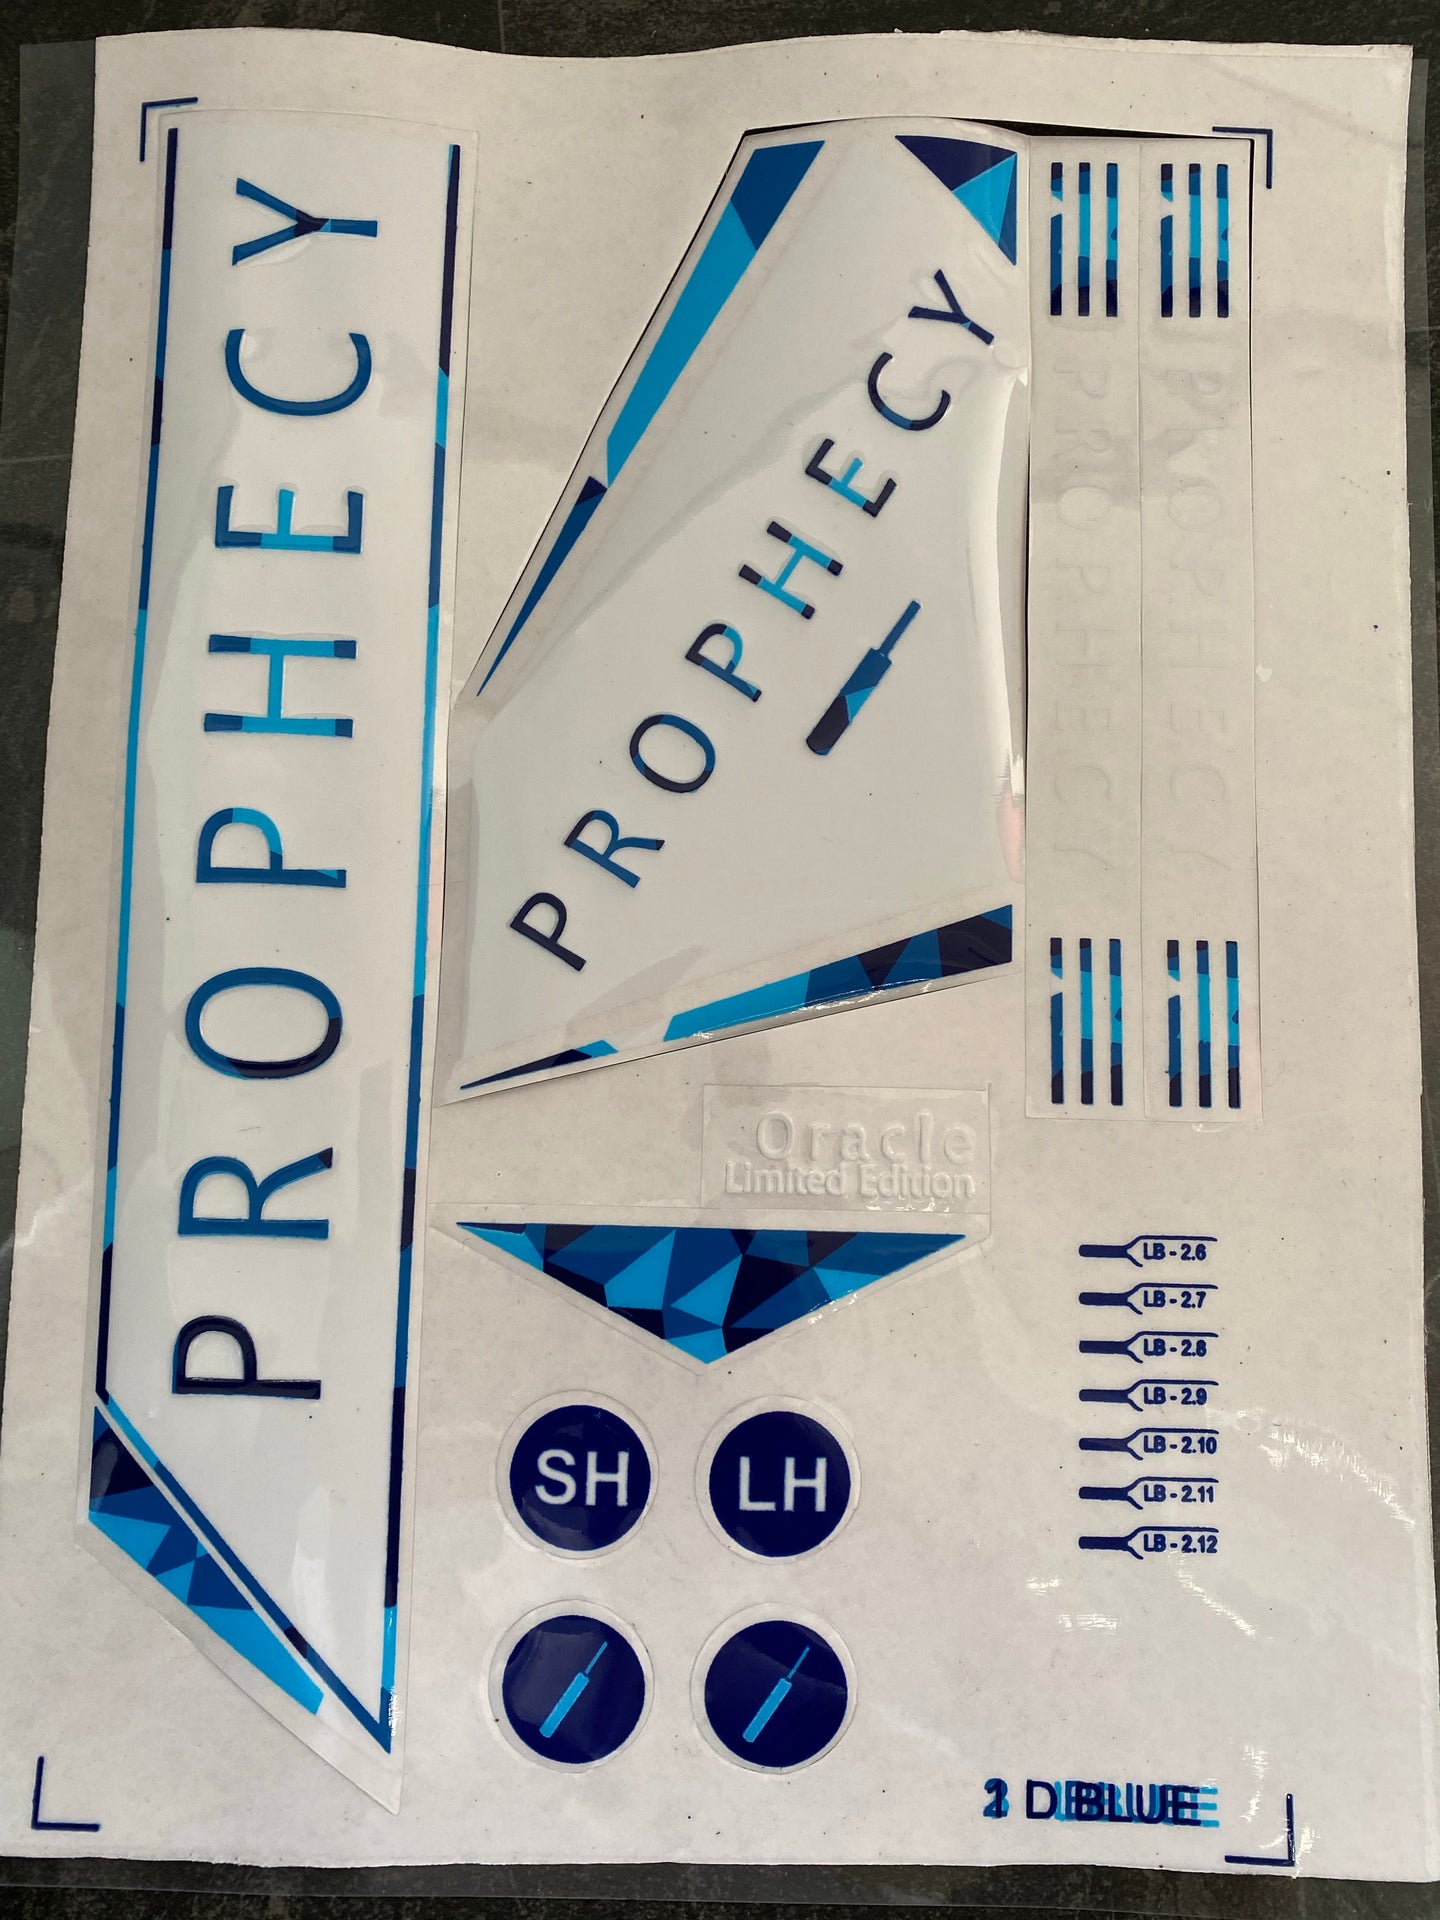 Prophecy Oracle Cricket Bat Stickers - Prophecy Cricket